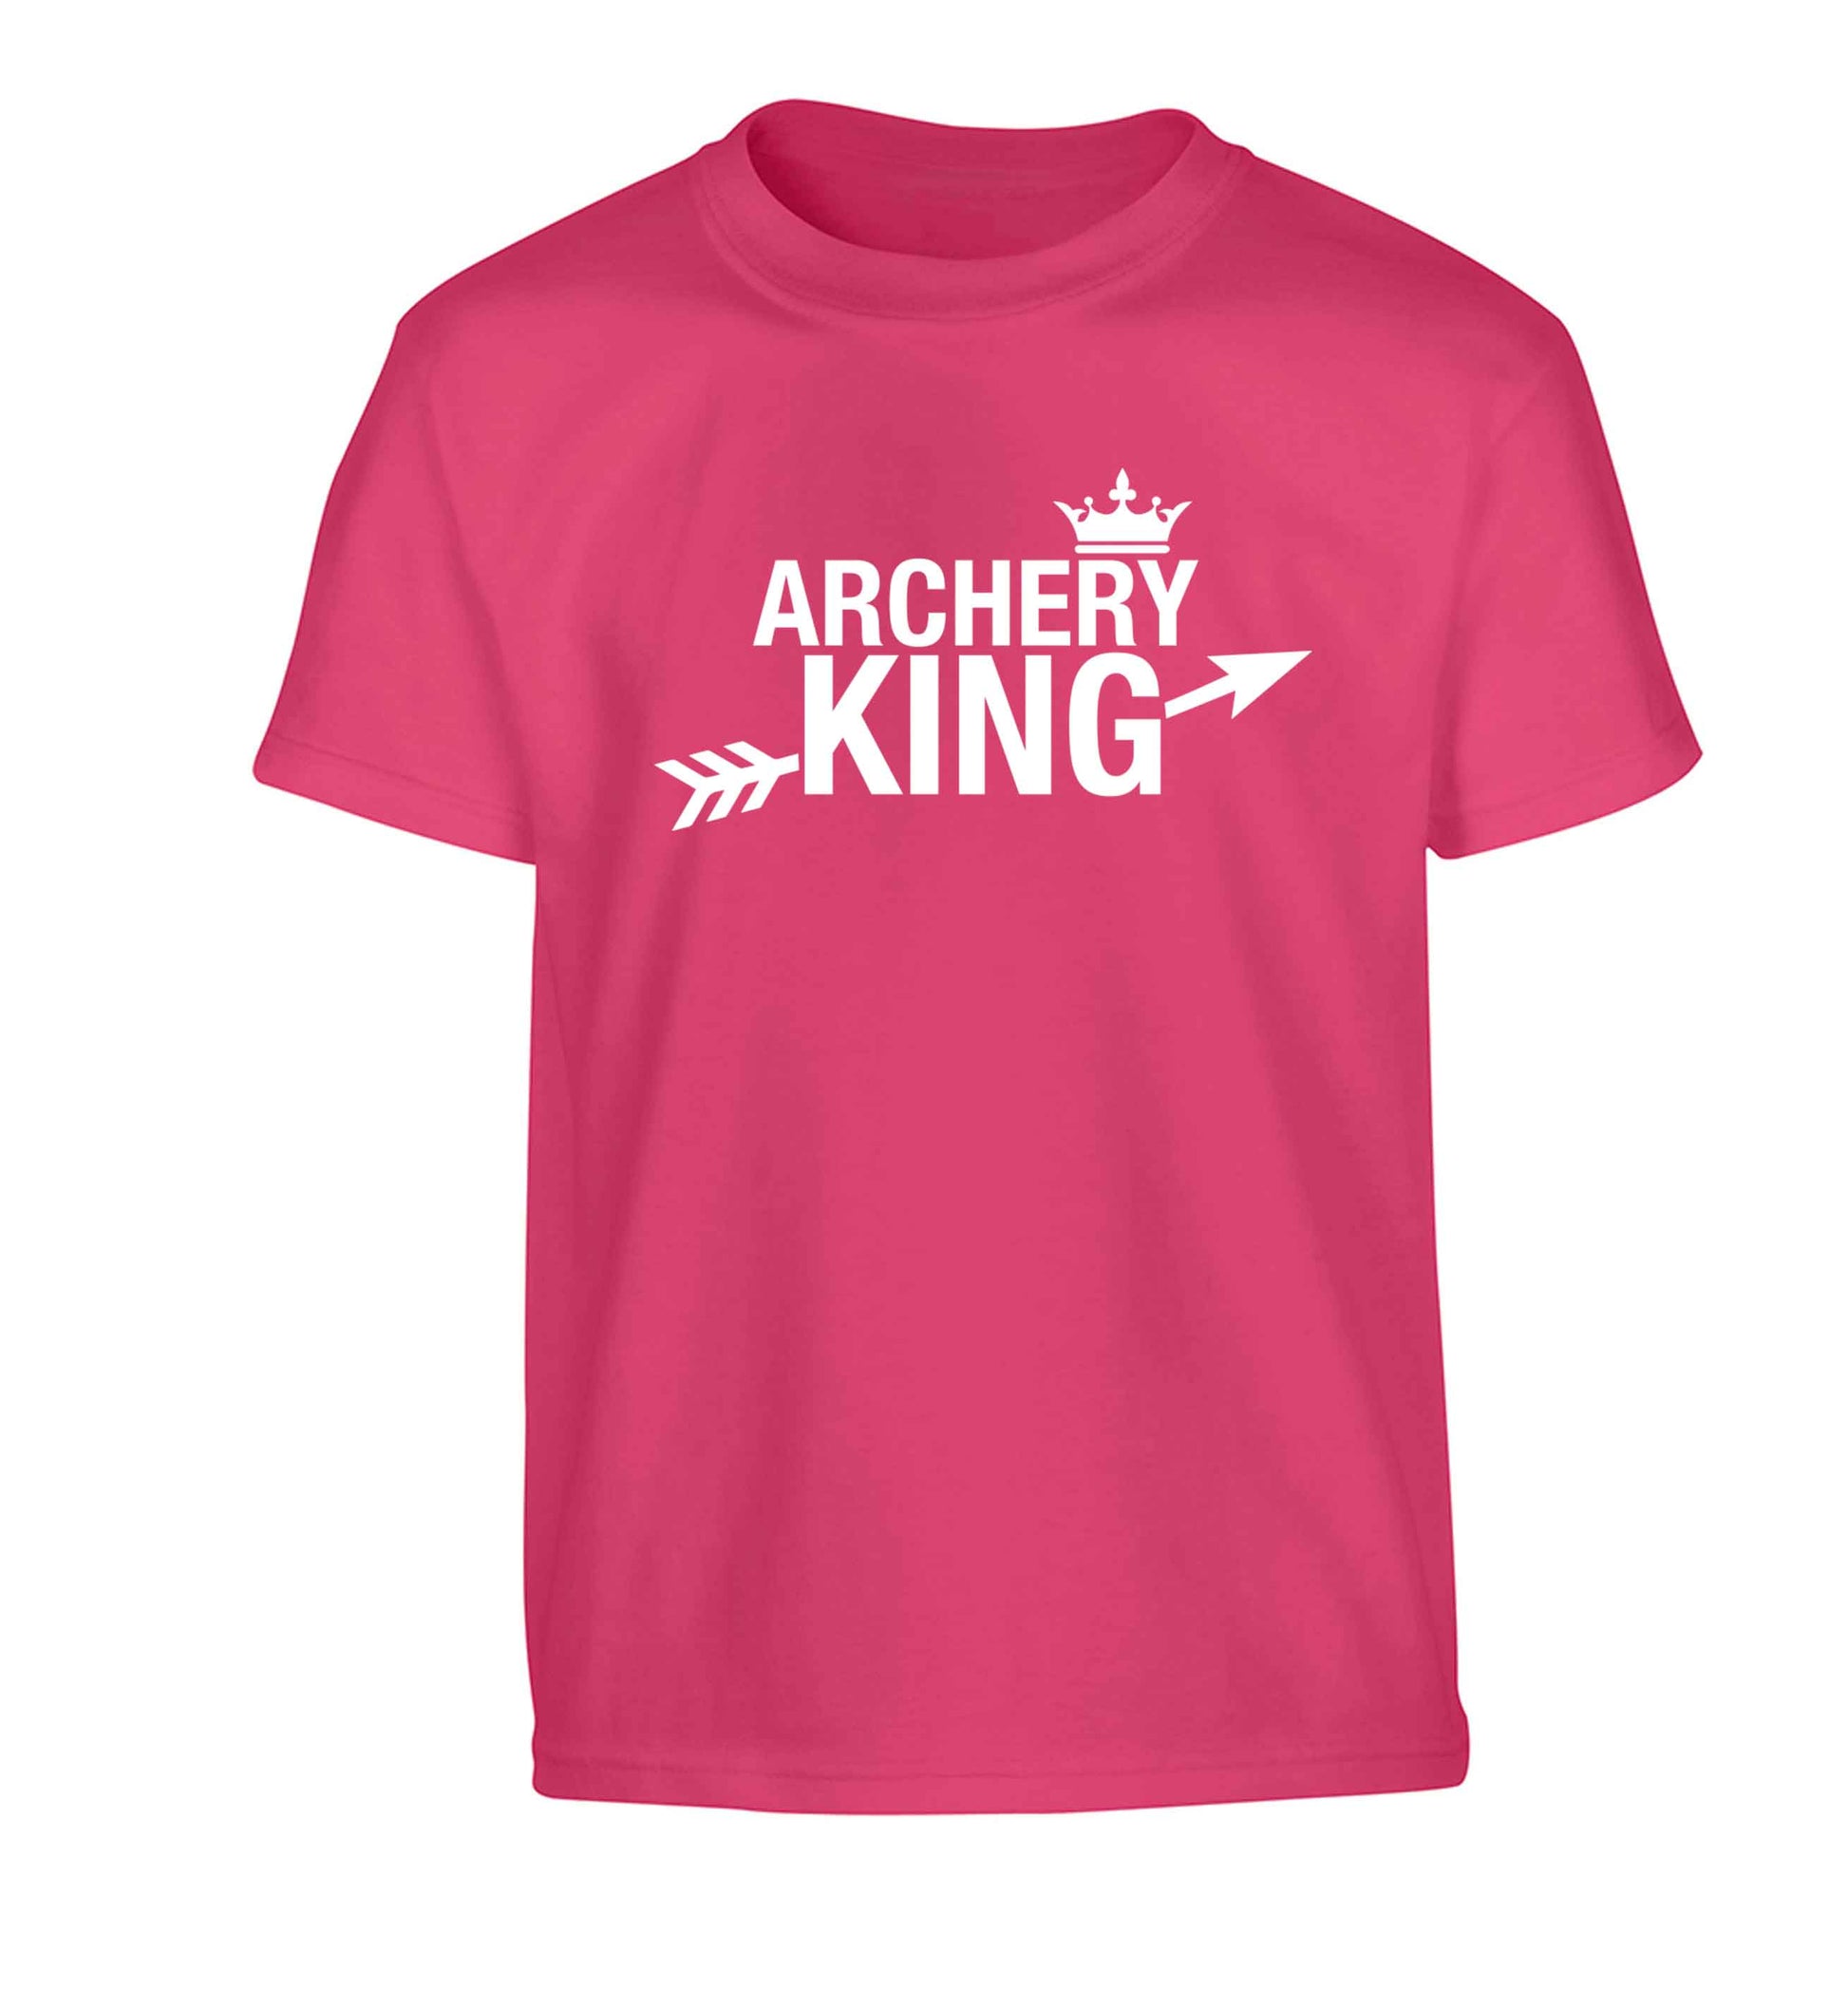 Archery king Children's pink Tshirt 12-13 Years